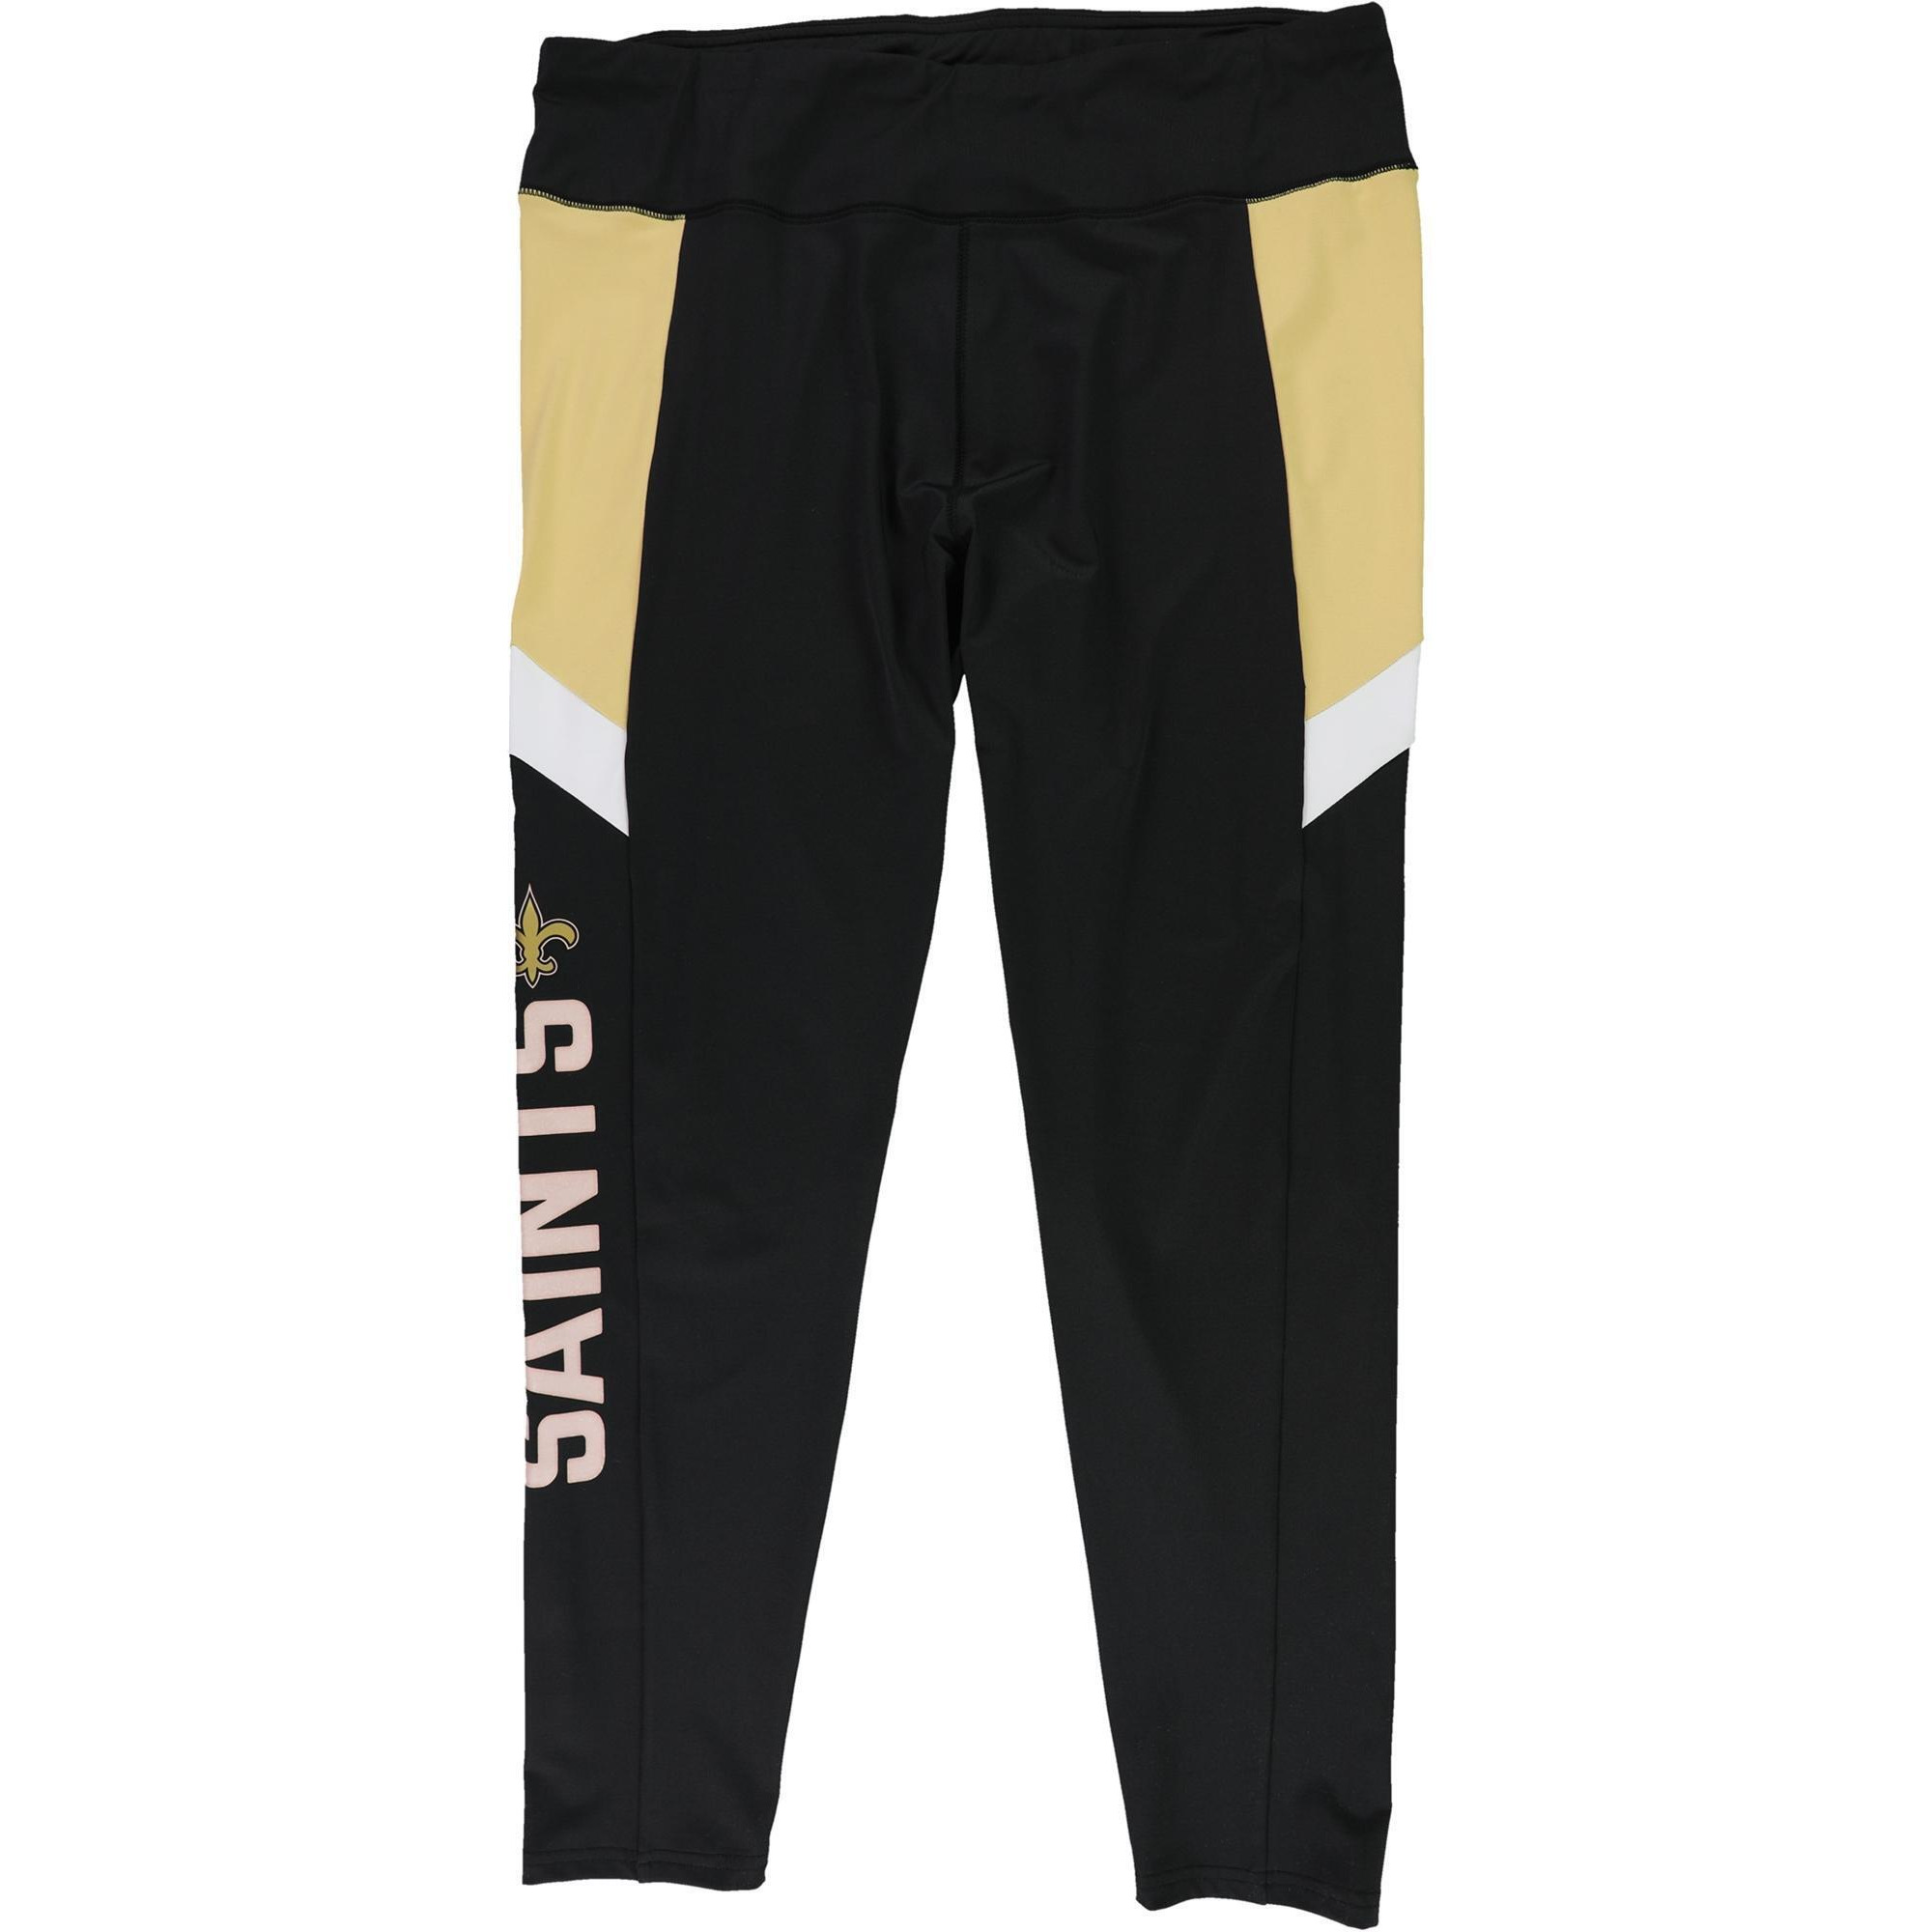 NFL Womens New Orleans Saints Compression Athletic Pants, Style # 6J900938